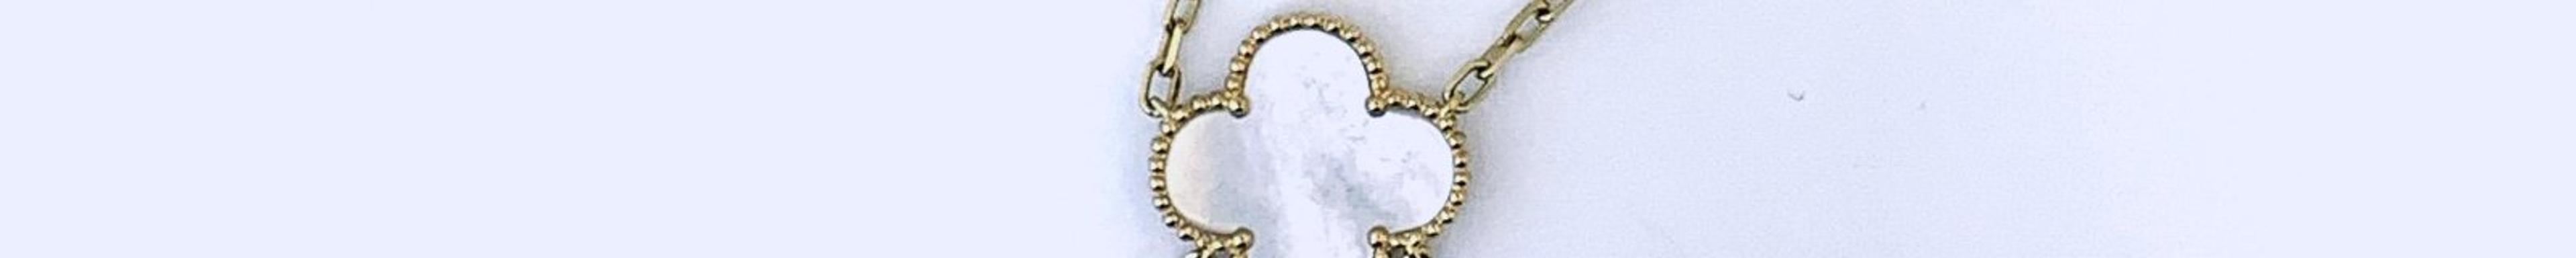 Van Cleef & Arpels Magic Alhambra 18K Necklace 6 Motifs